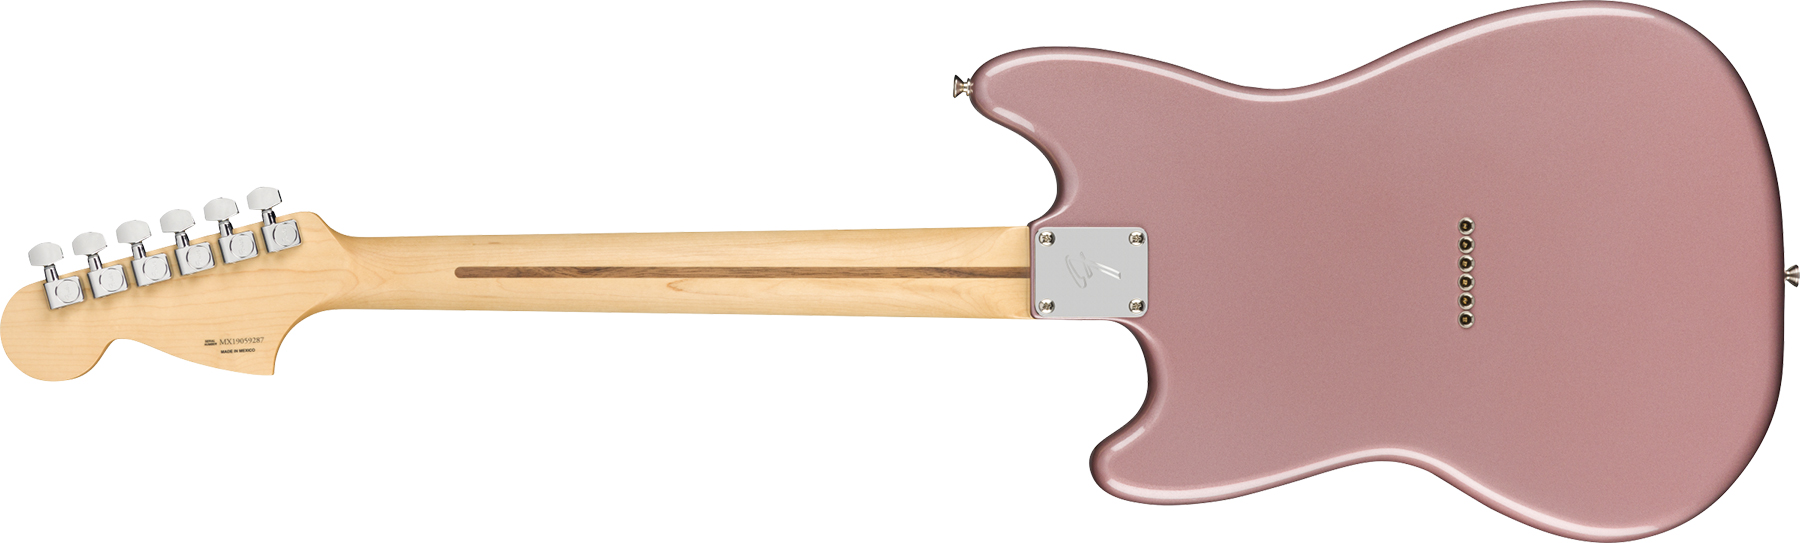 Fender Mustang Player 90 Mex Ht 2p90 Pf - Burgundy Mist Metallic - Retro-rock elektrische gitaar - Variation 1